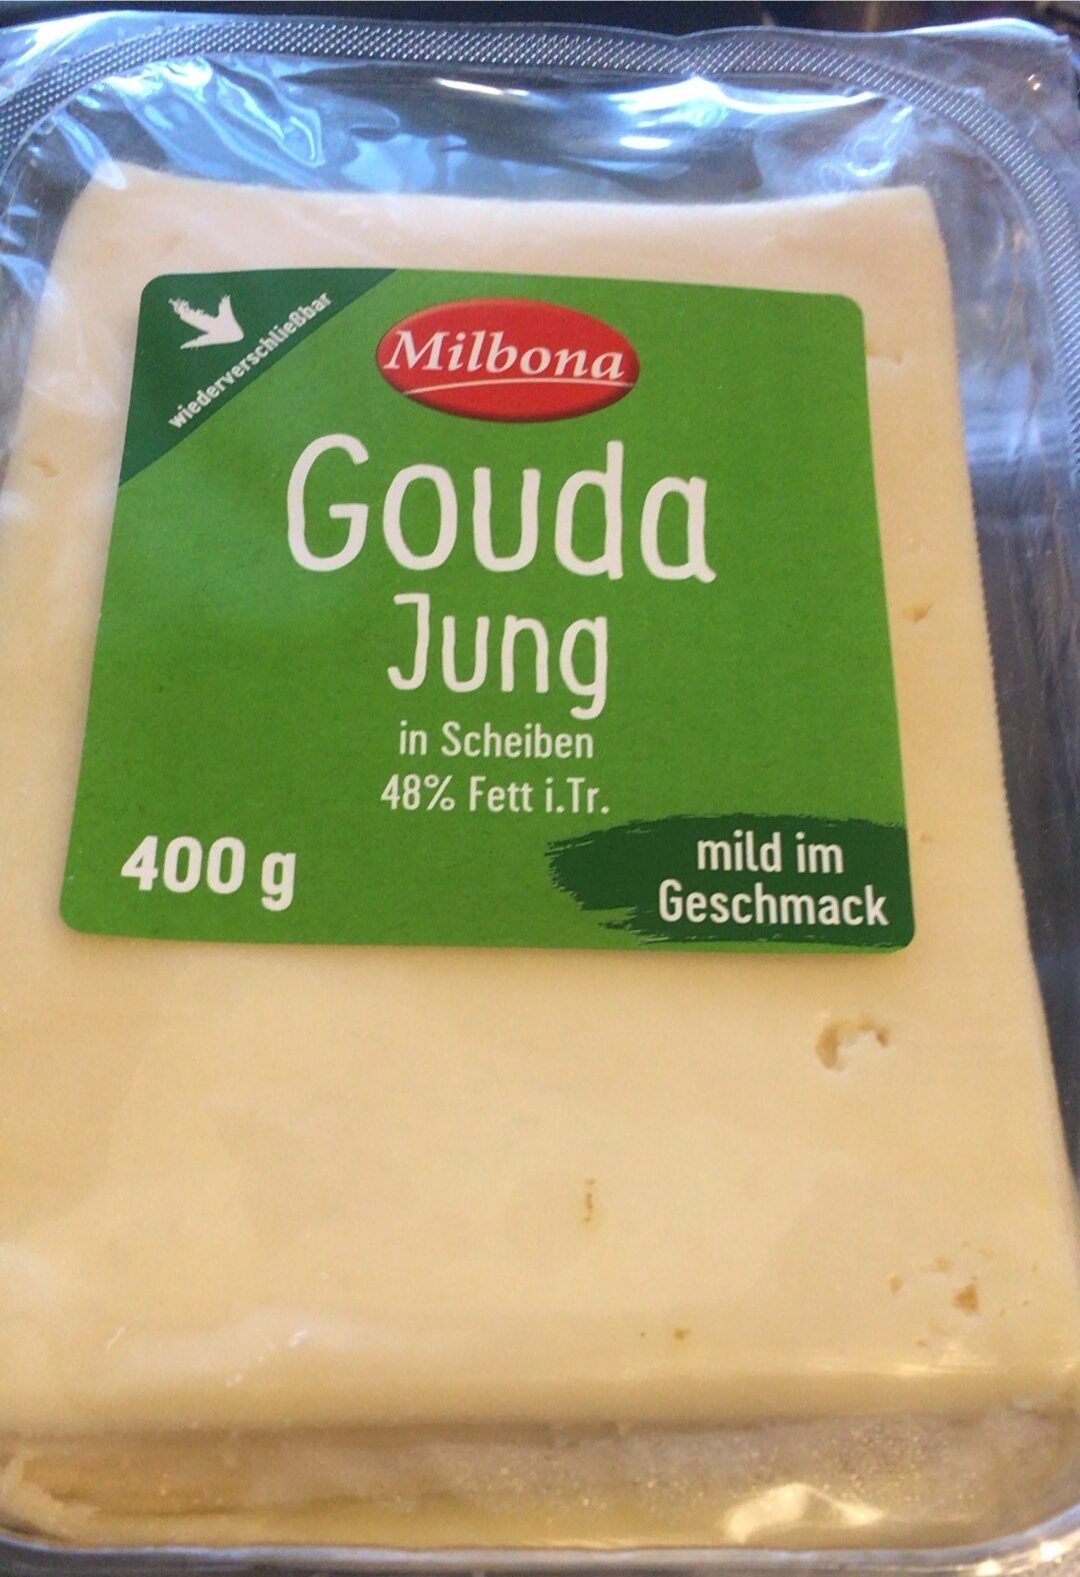 Gouda jung in Scheiben 48 % Fett i.Tr. - Product - de